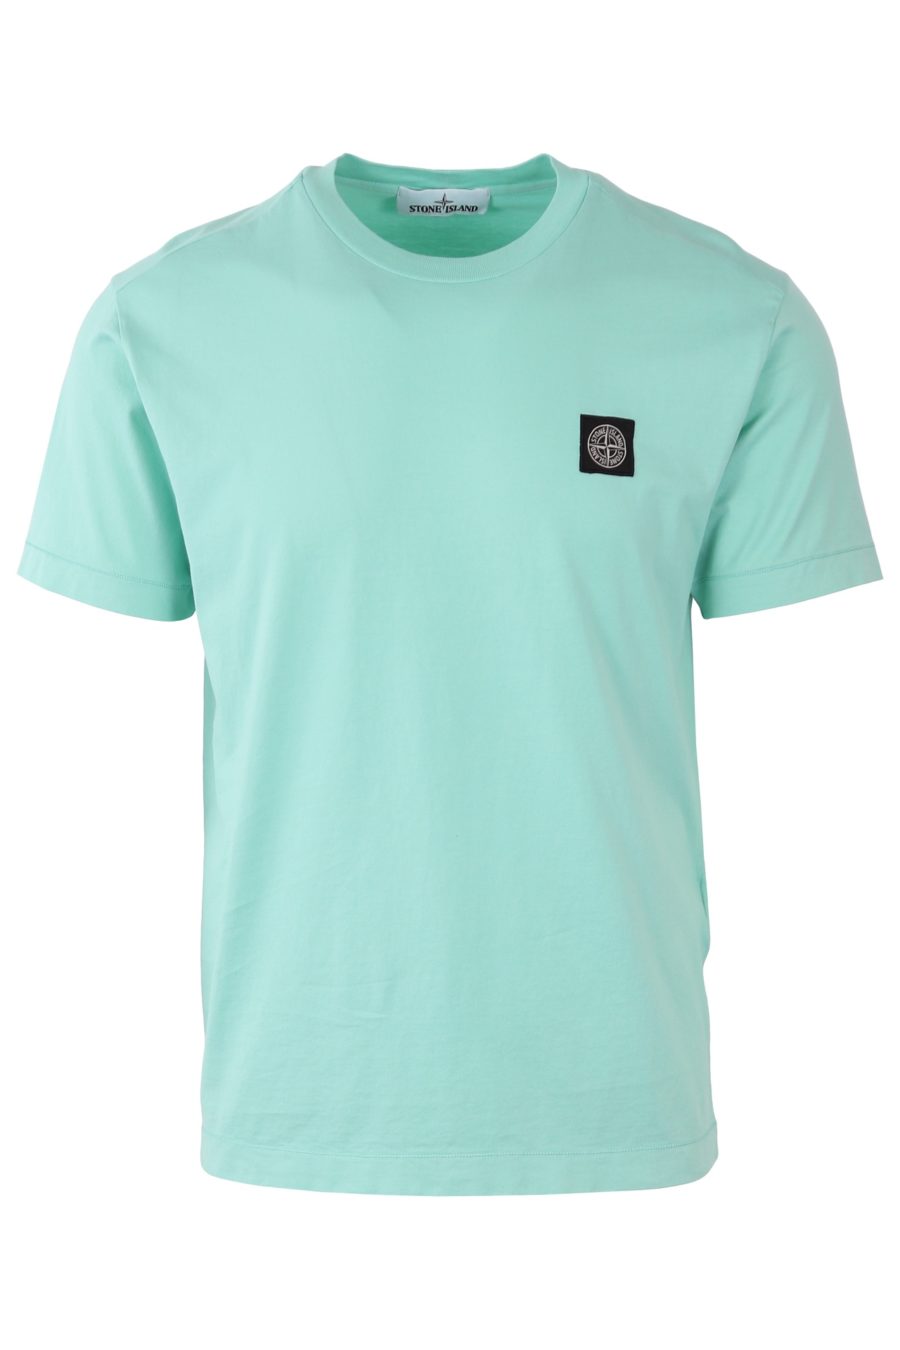 T-Shirt Stone Island mintfarben mit Logoaufnäher - 01ff4e8bbca9210a8576191f82ed11f533c23cfe